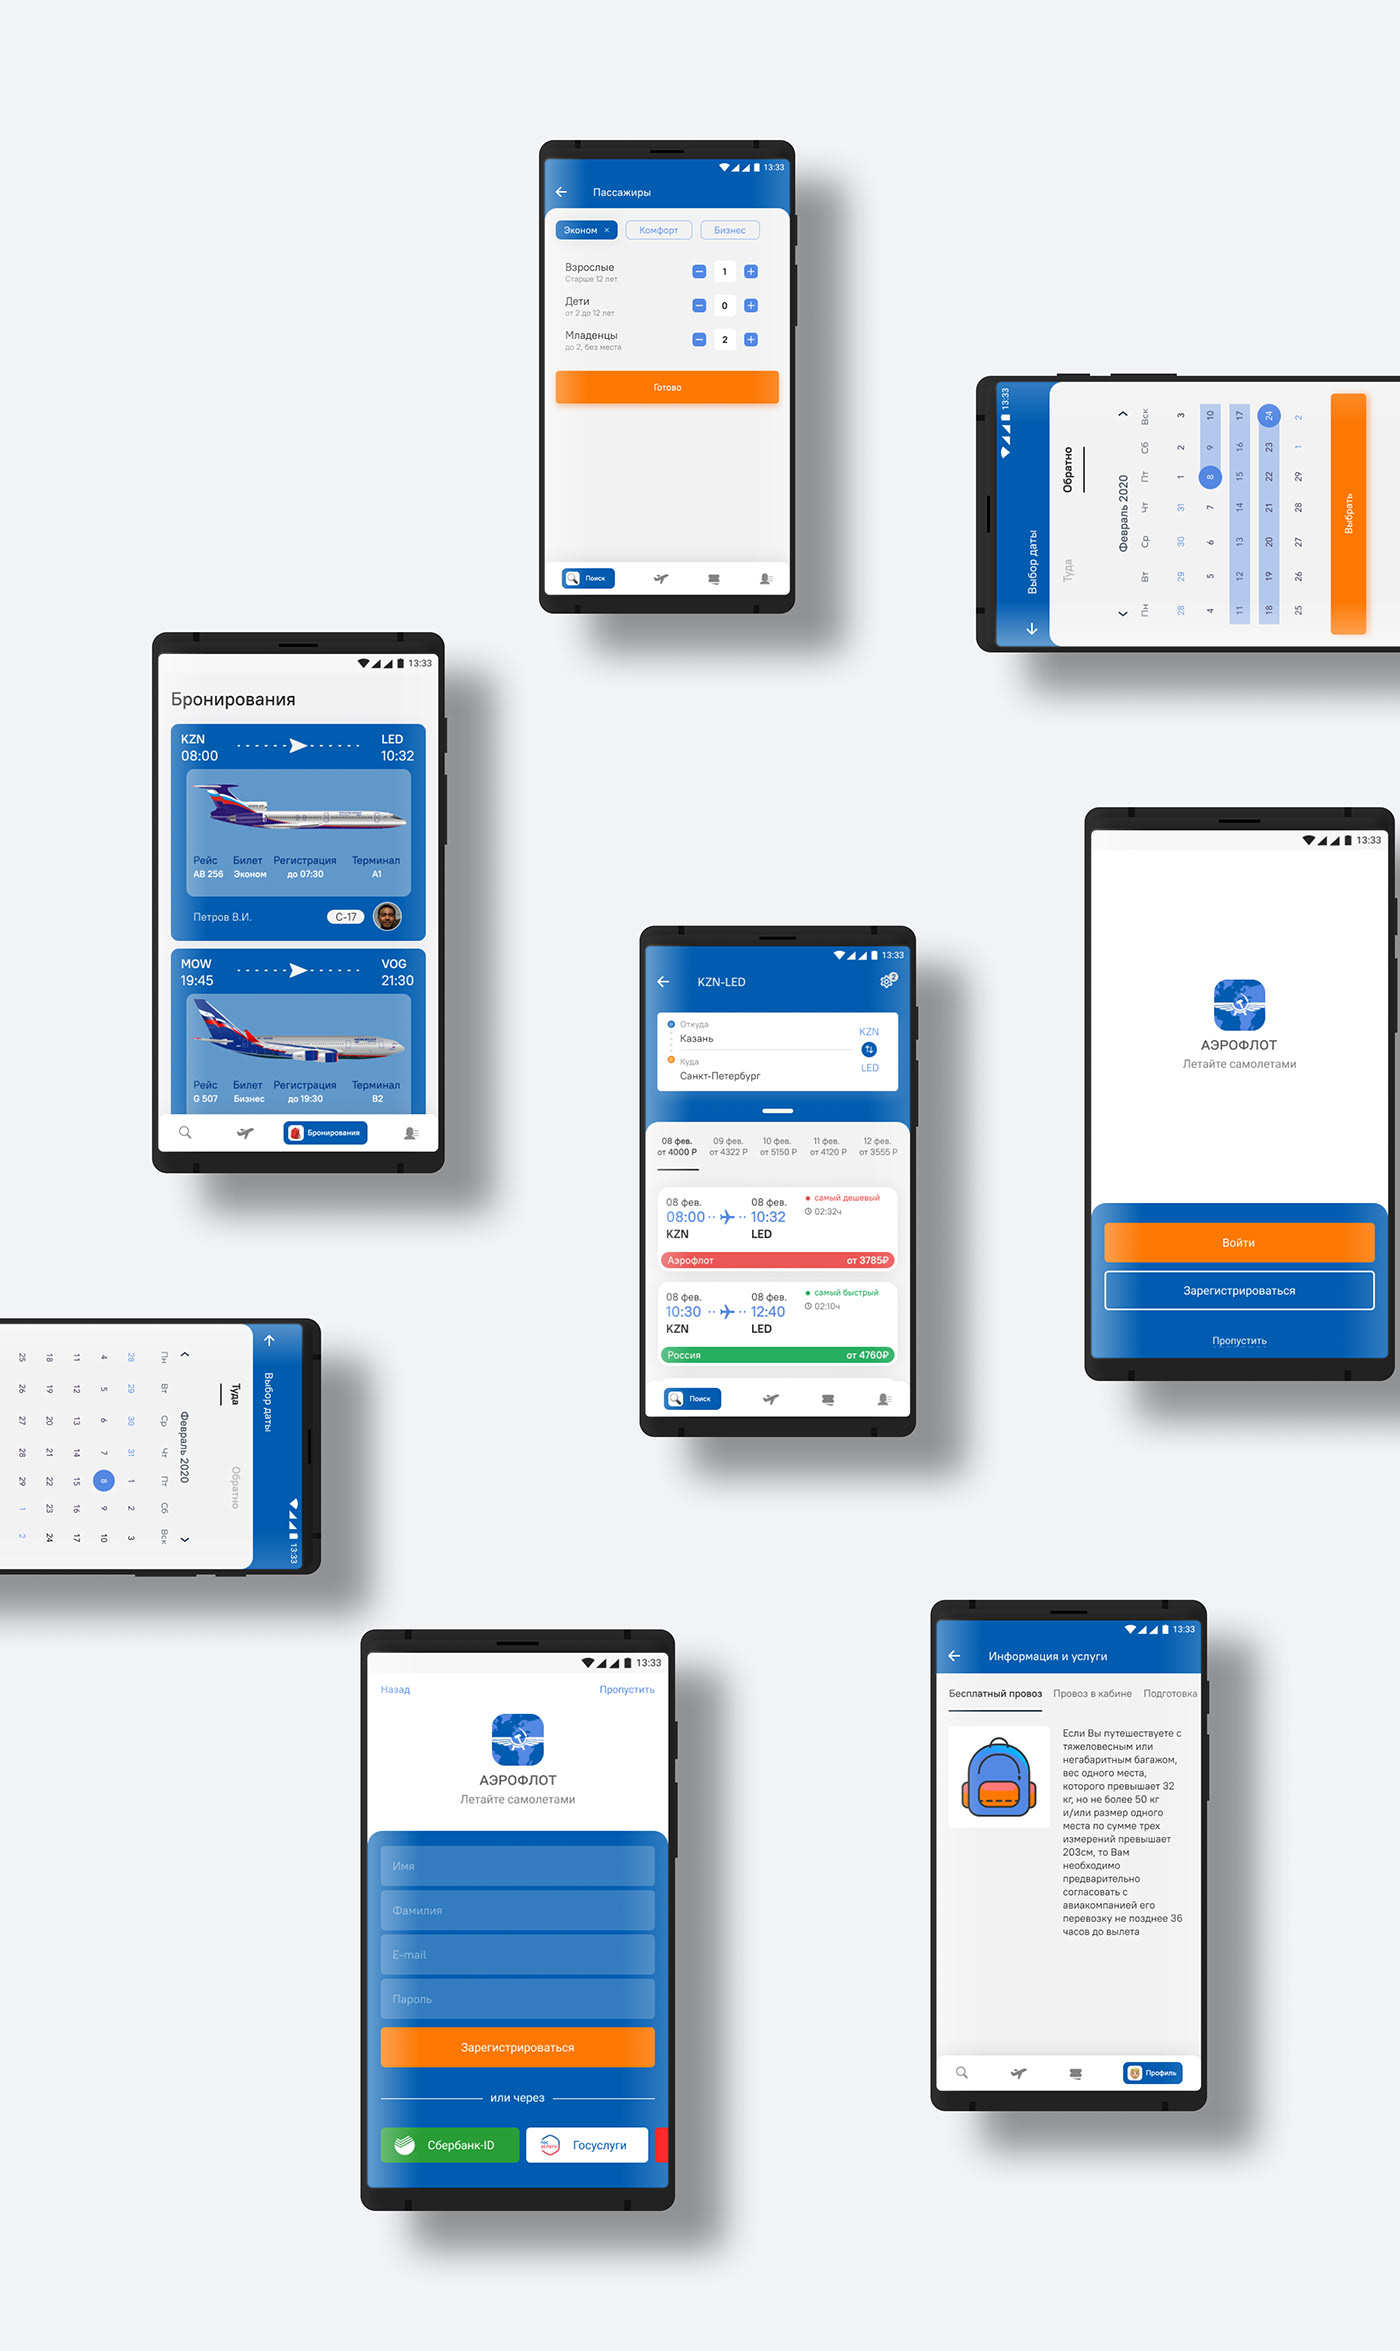 aeroflot airline flight redesign ticket ux/ui app design bookings Travel android